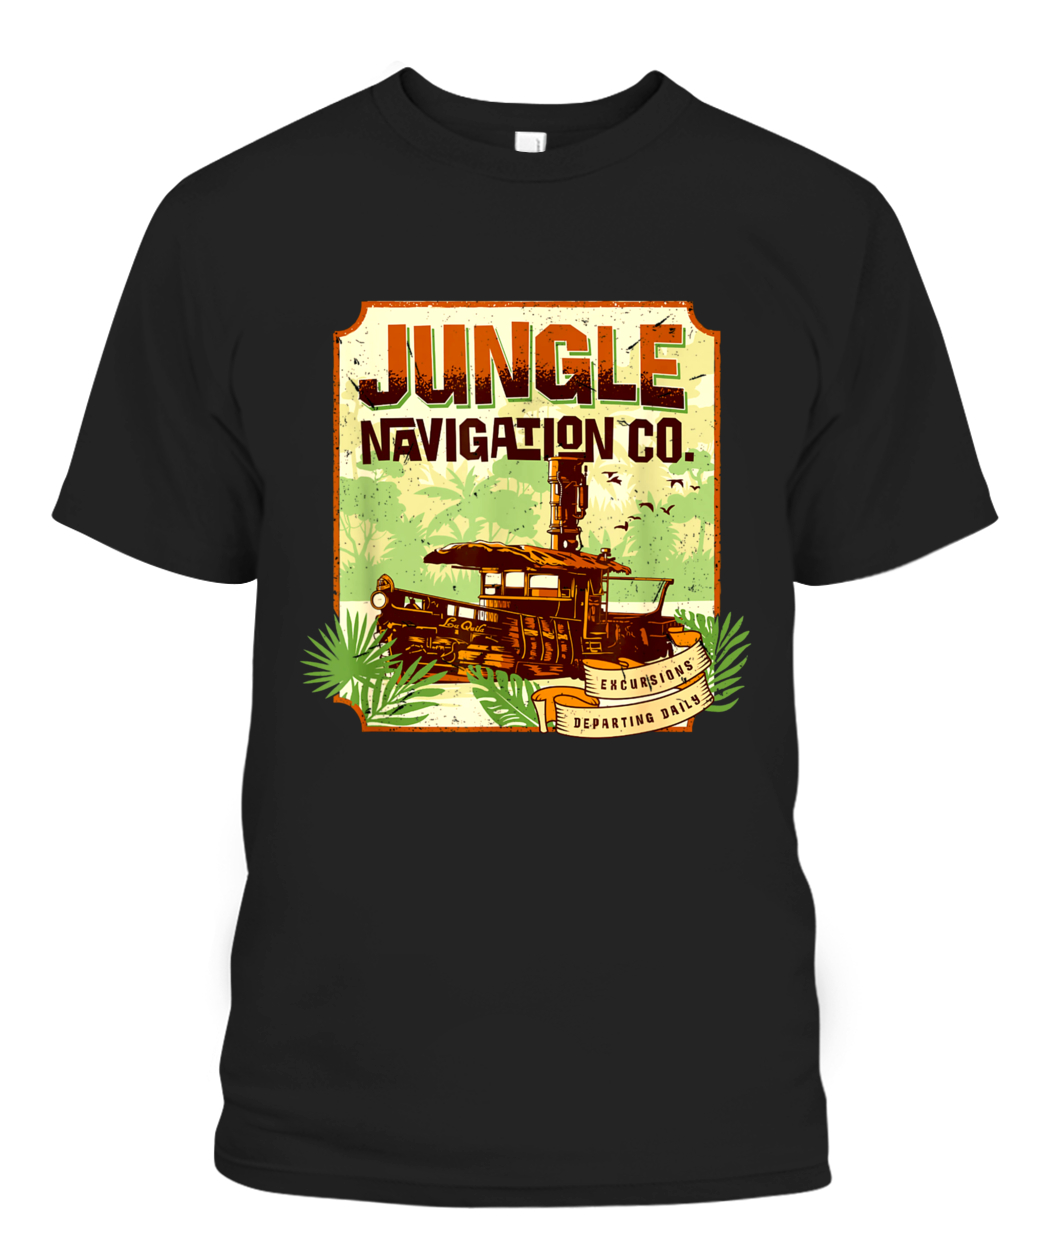 disney jungle cruise shirt